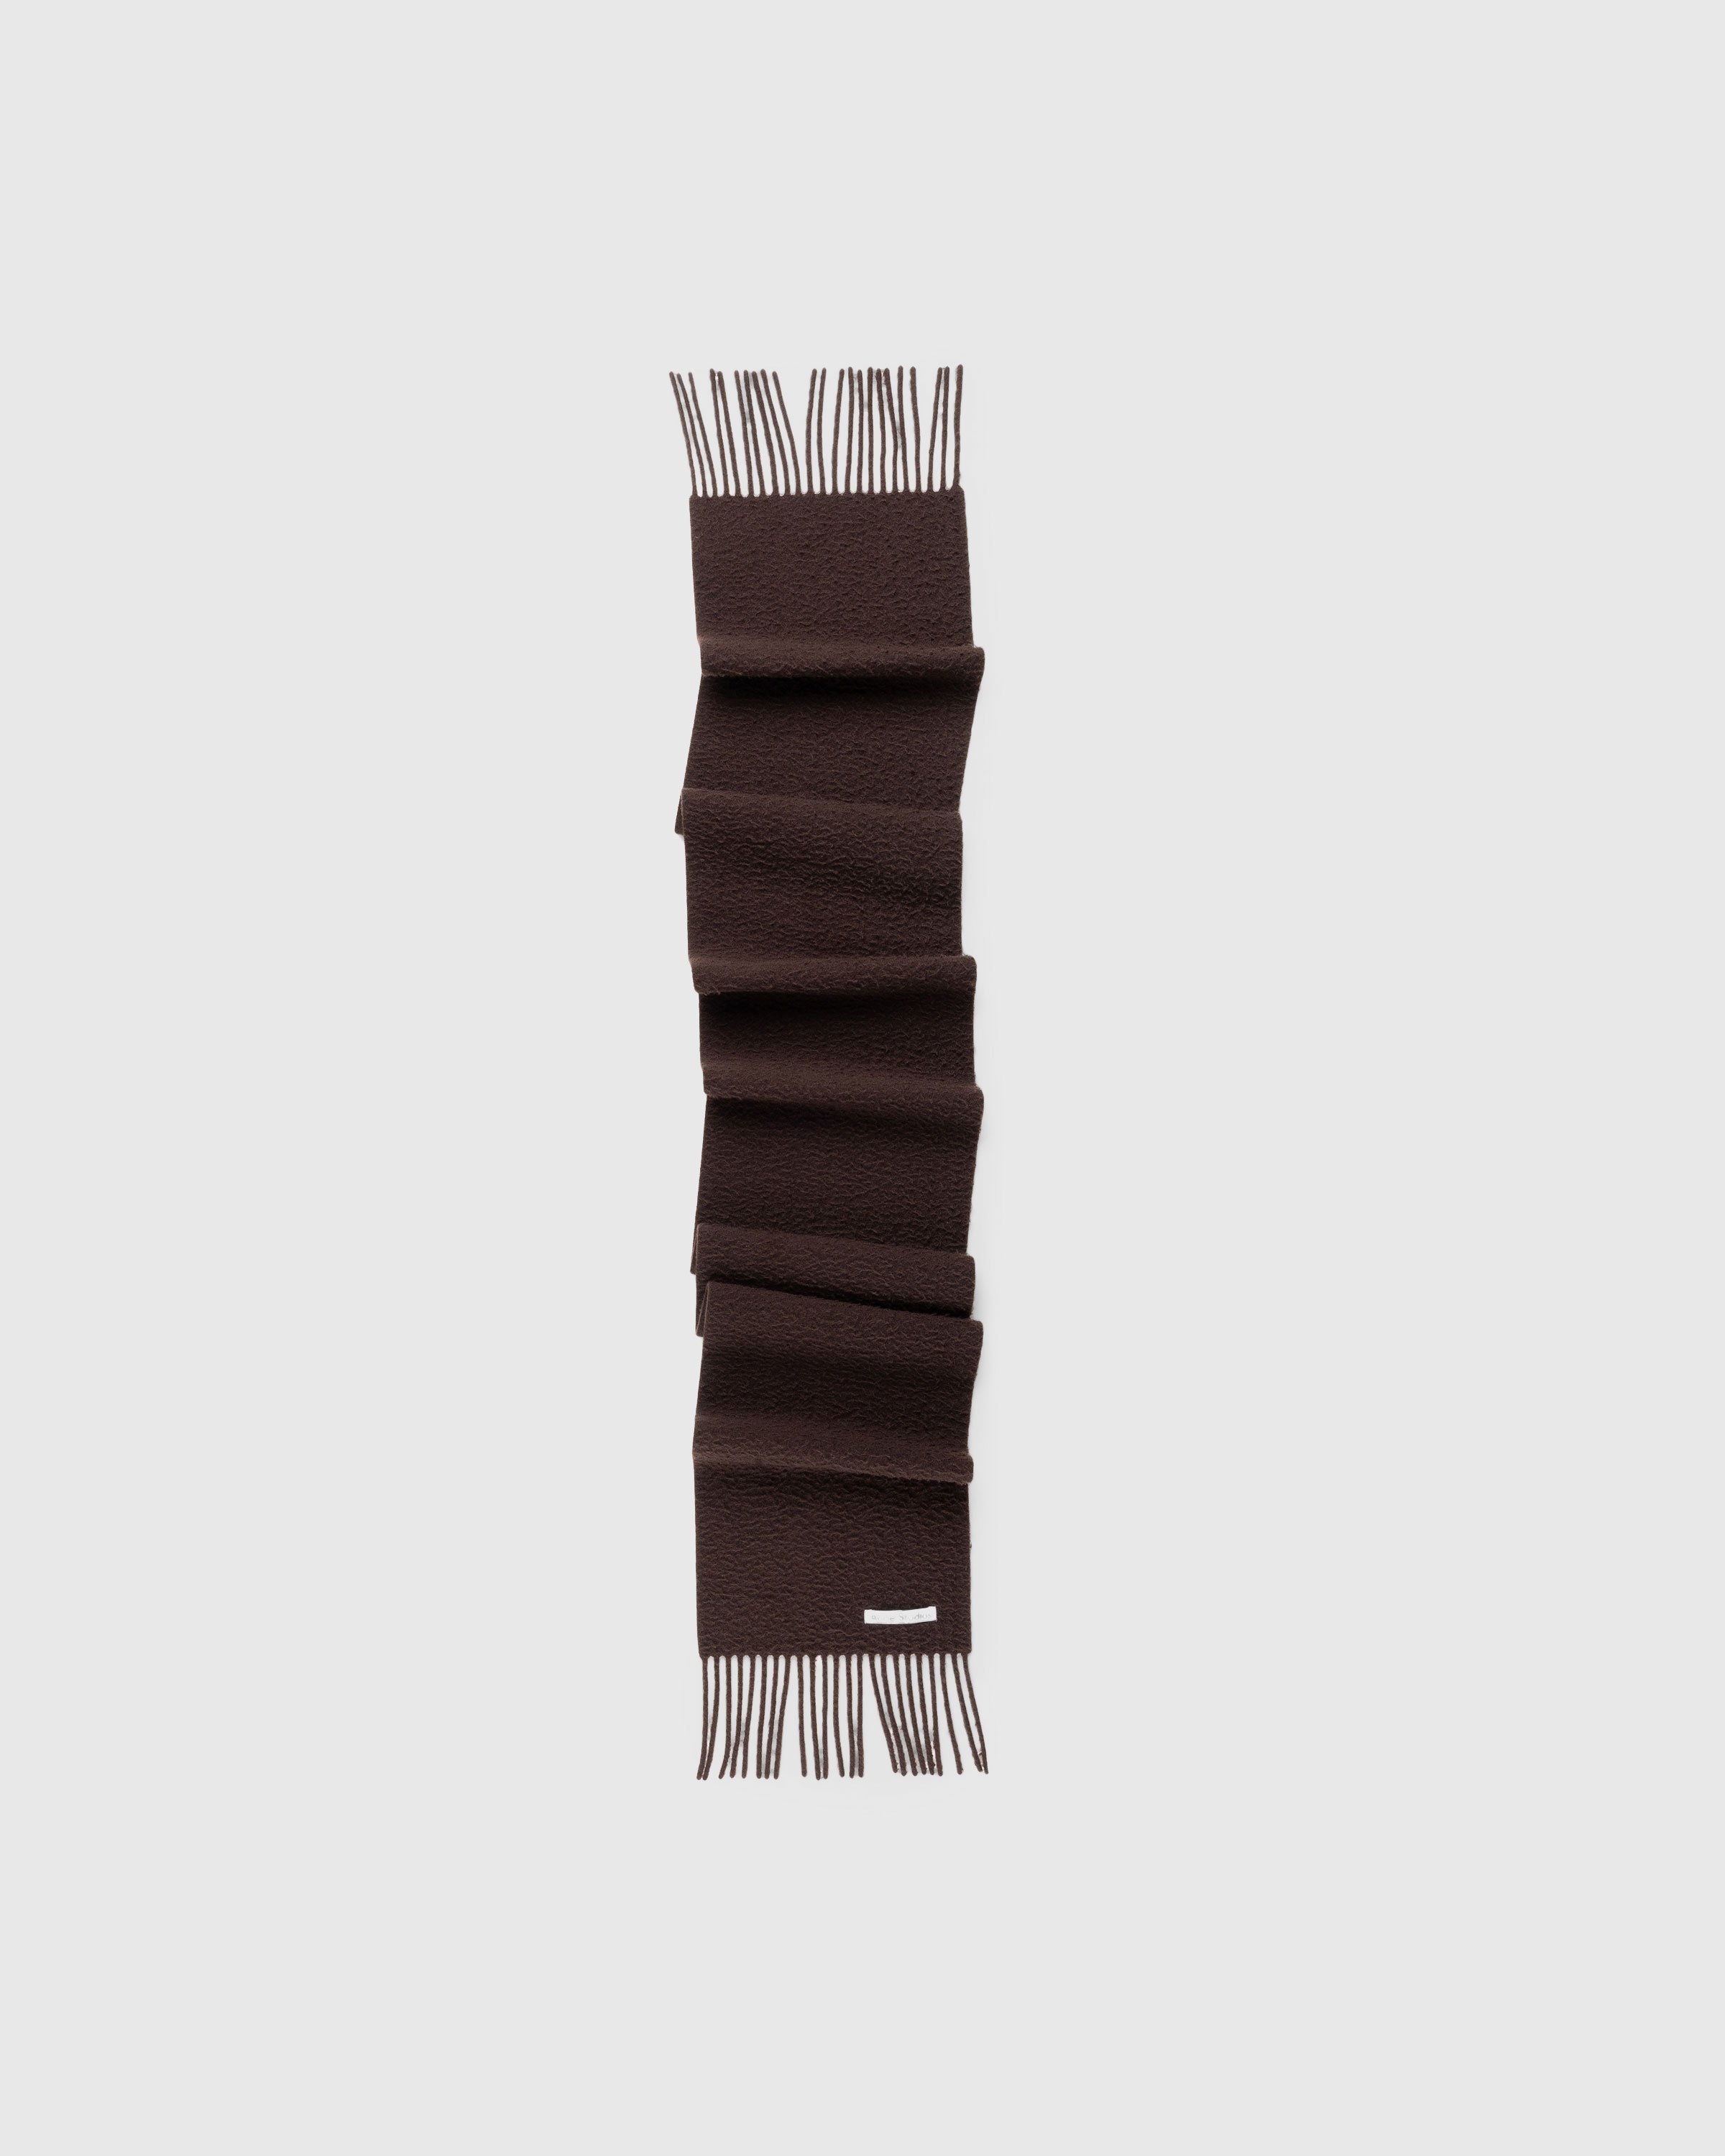 Acne Studios - Wool Fringe Scarf Chocolate Brown - Accessories - Brown - Image 1